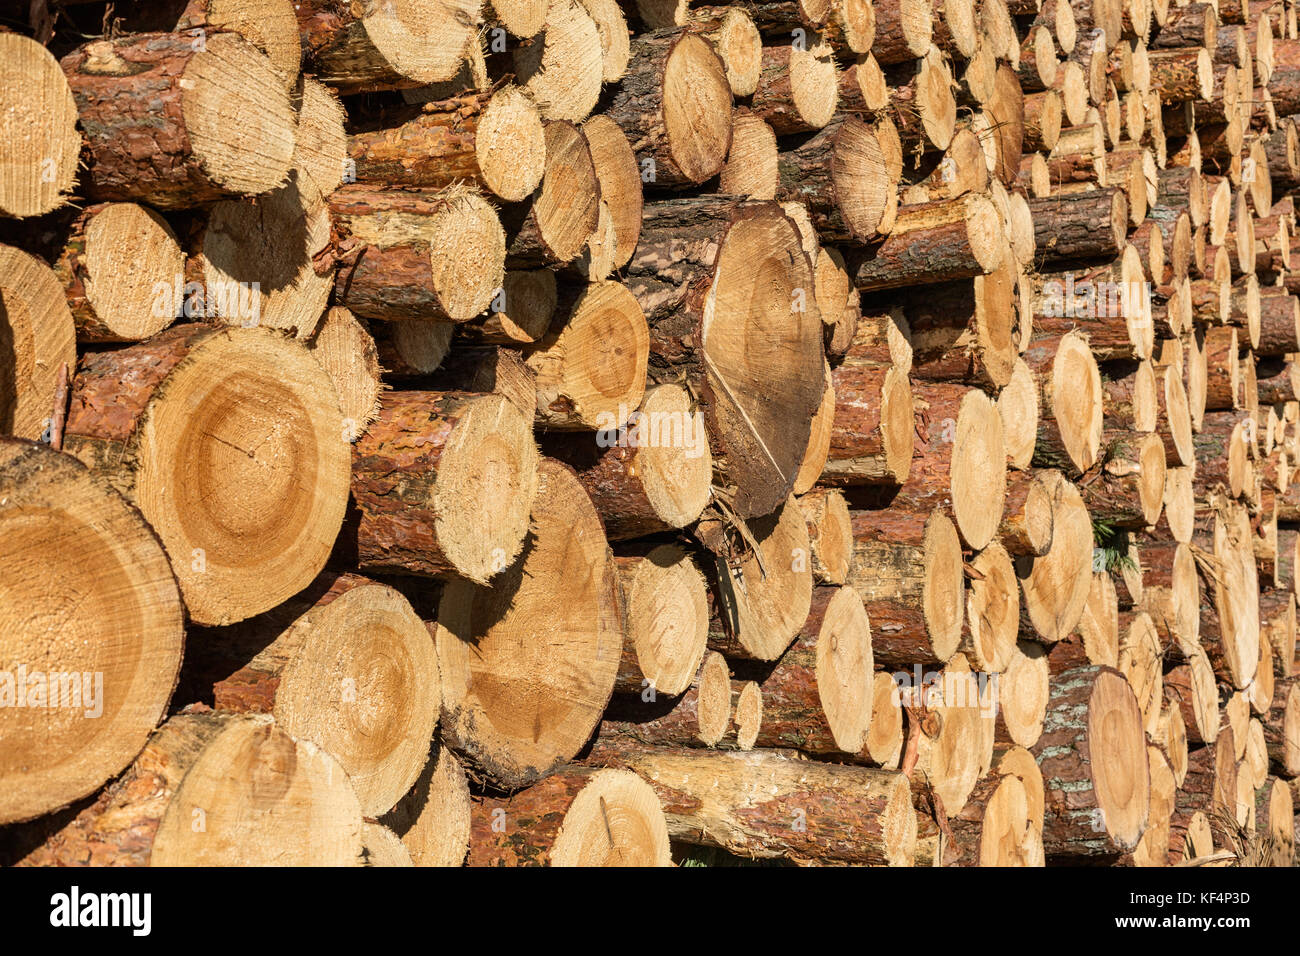 Big pile of tree trunks Stock Photo